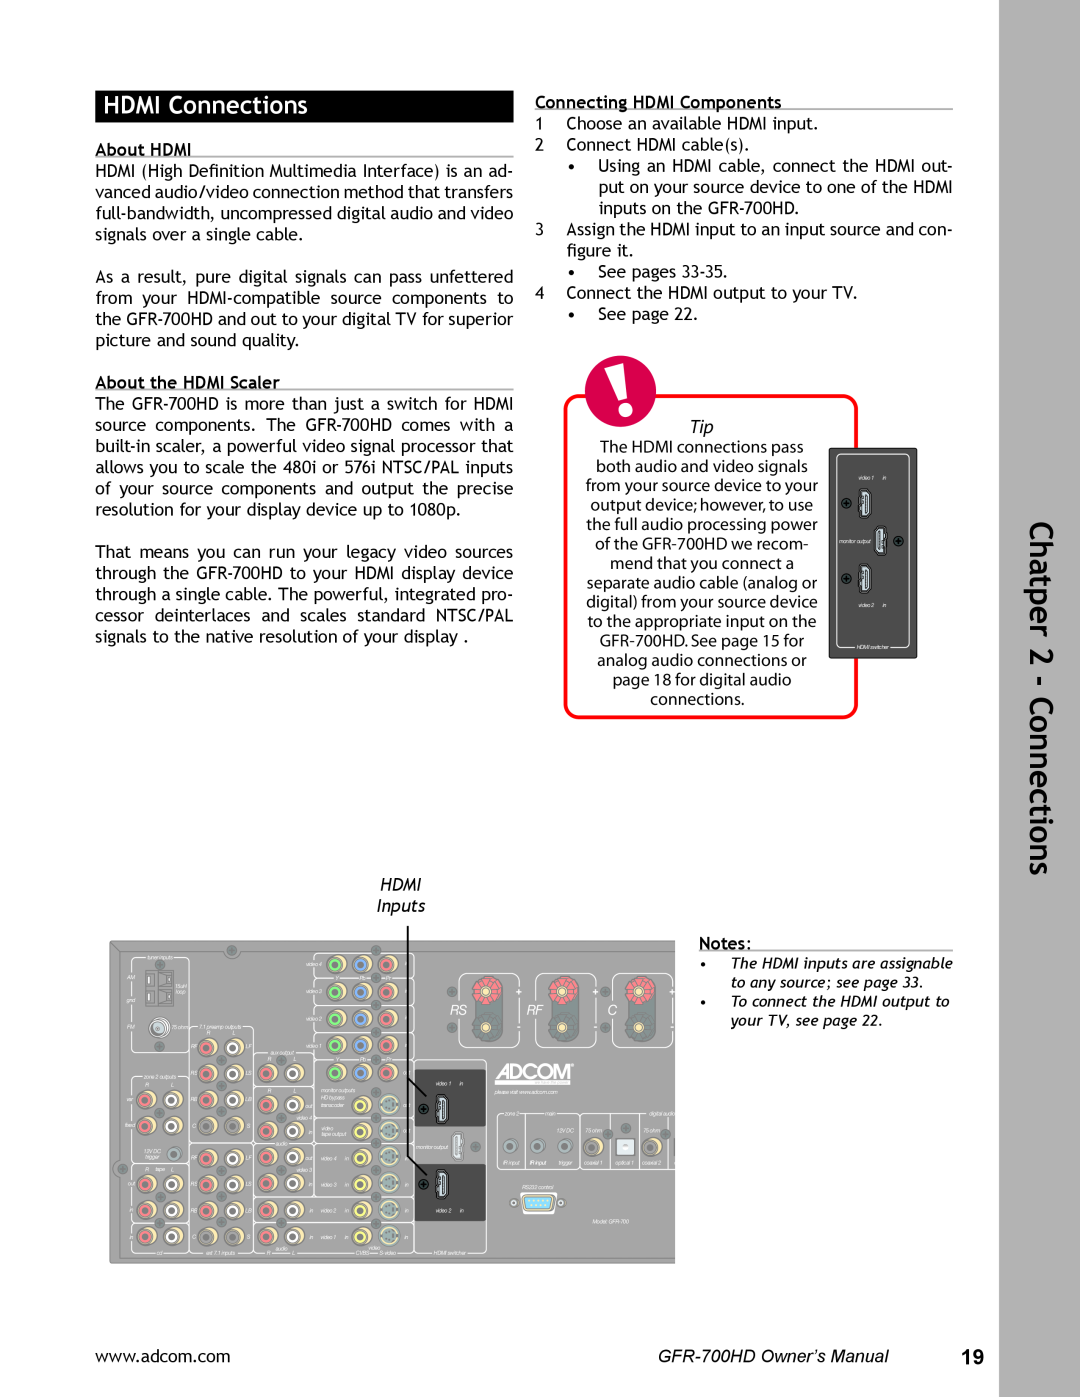 Adcom GFR-700HD user manual HDMI Connections, About HDMI, About the HDMI Scaler, HDMI Inputs, Connecting HDMI Components 